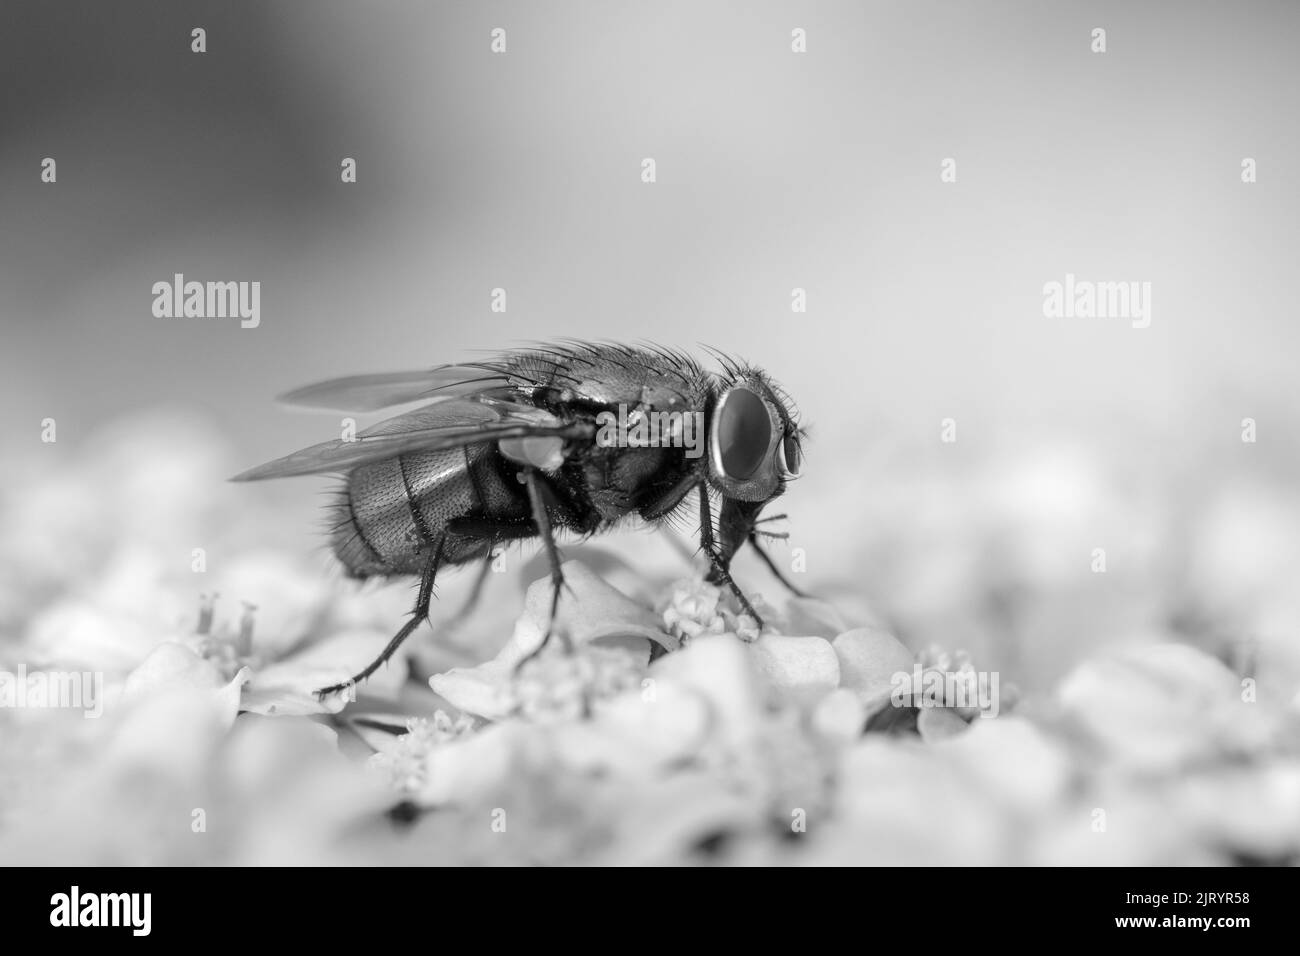 Black and white image of a Green Bottle Fly (Phaenicia sericata) on Achillea millefollium Stock Photo